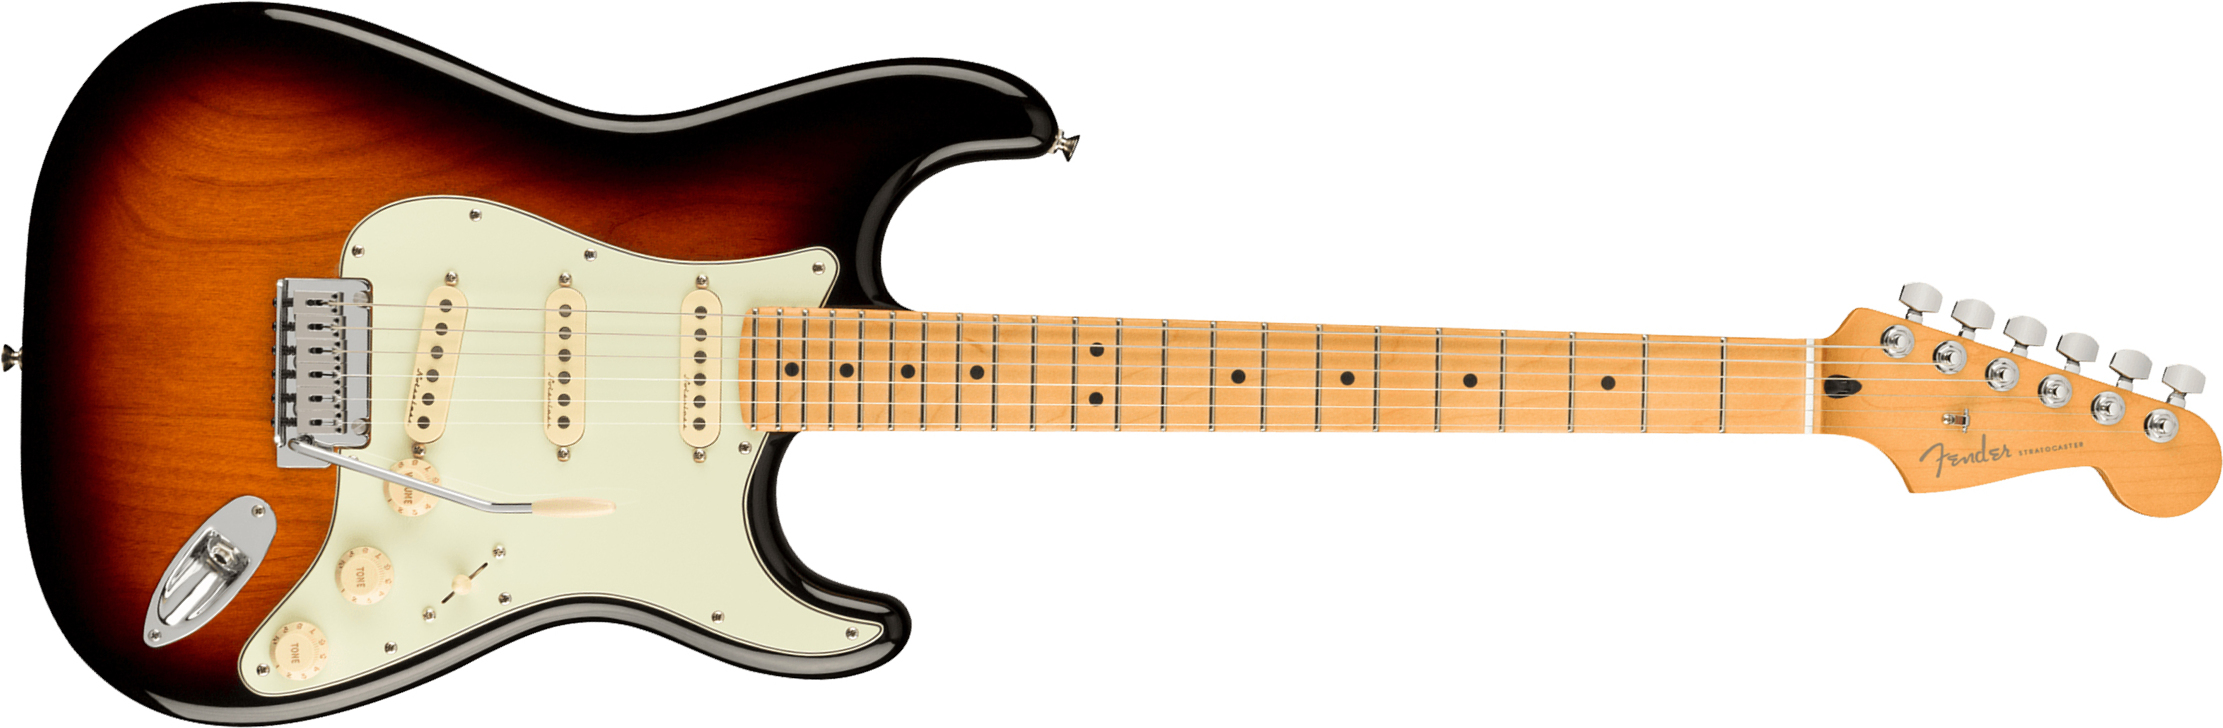 Fender Strat Player Plus Mex 3s Trem Mn - 3-color Sunburst - Elektrische gitaar in Str-vorm - Main picture